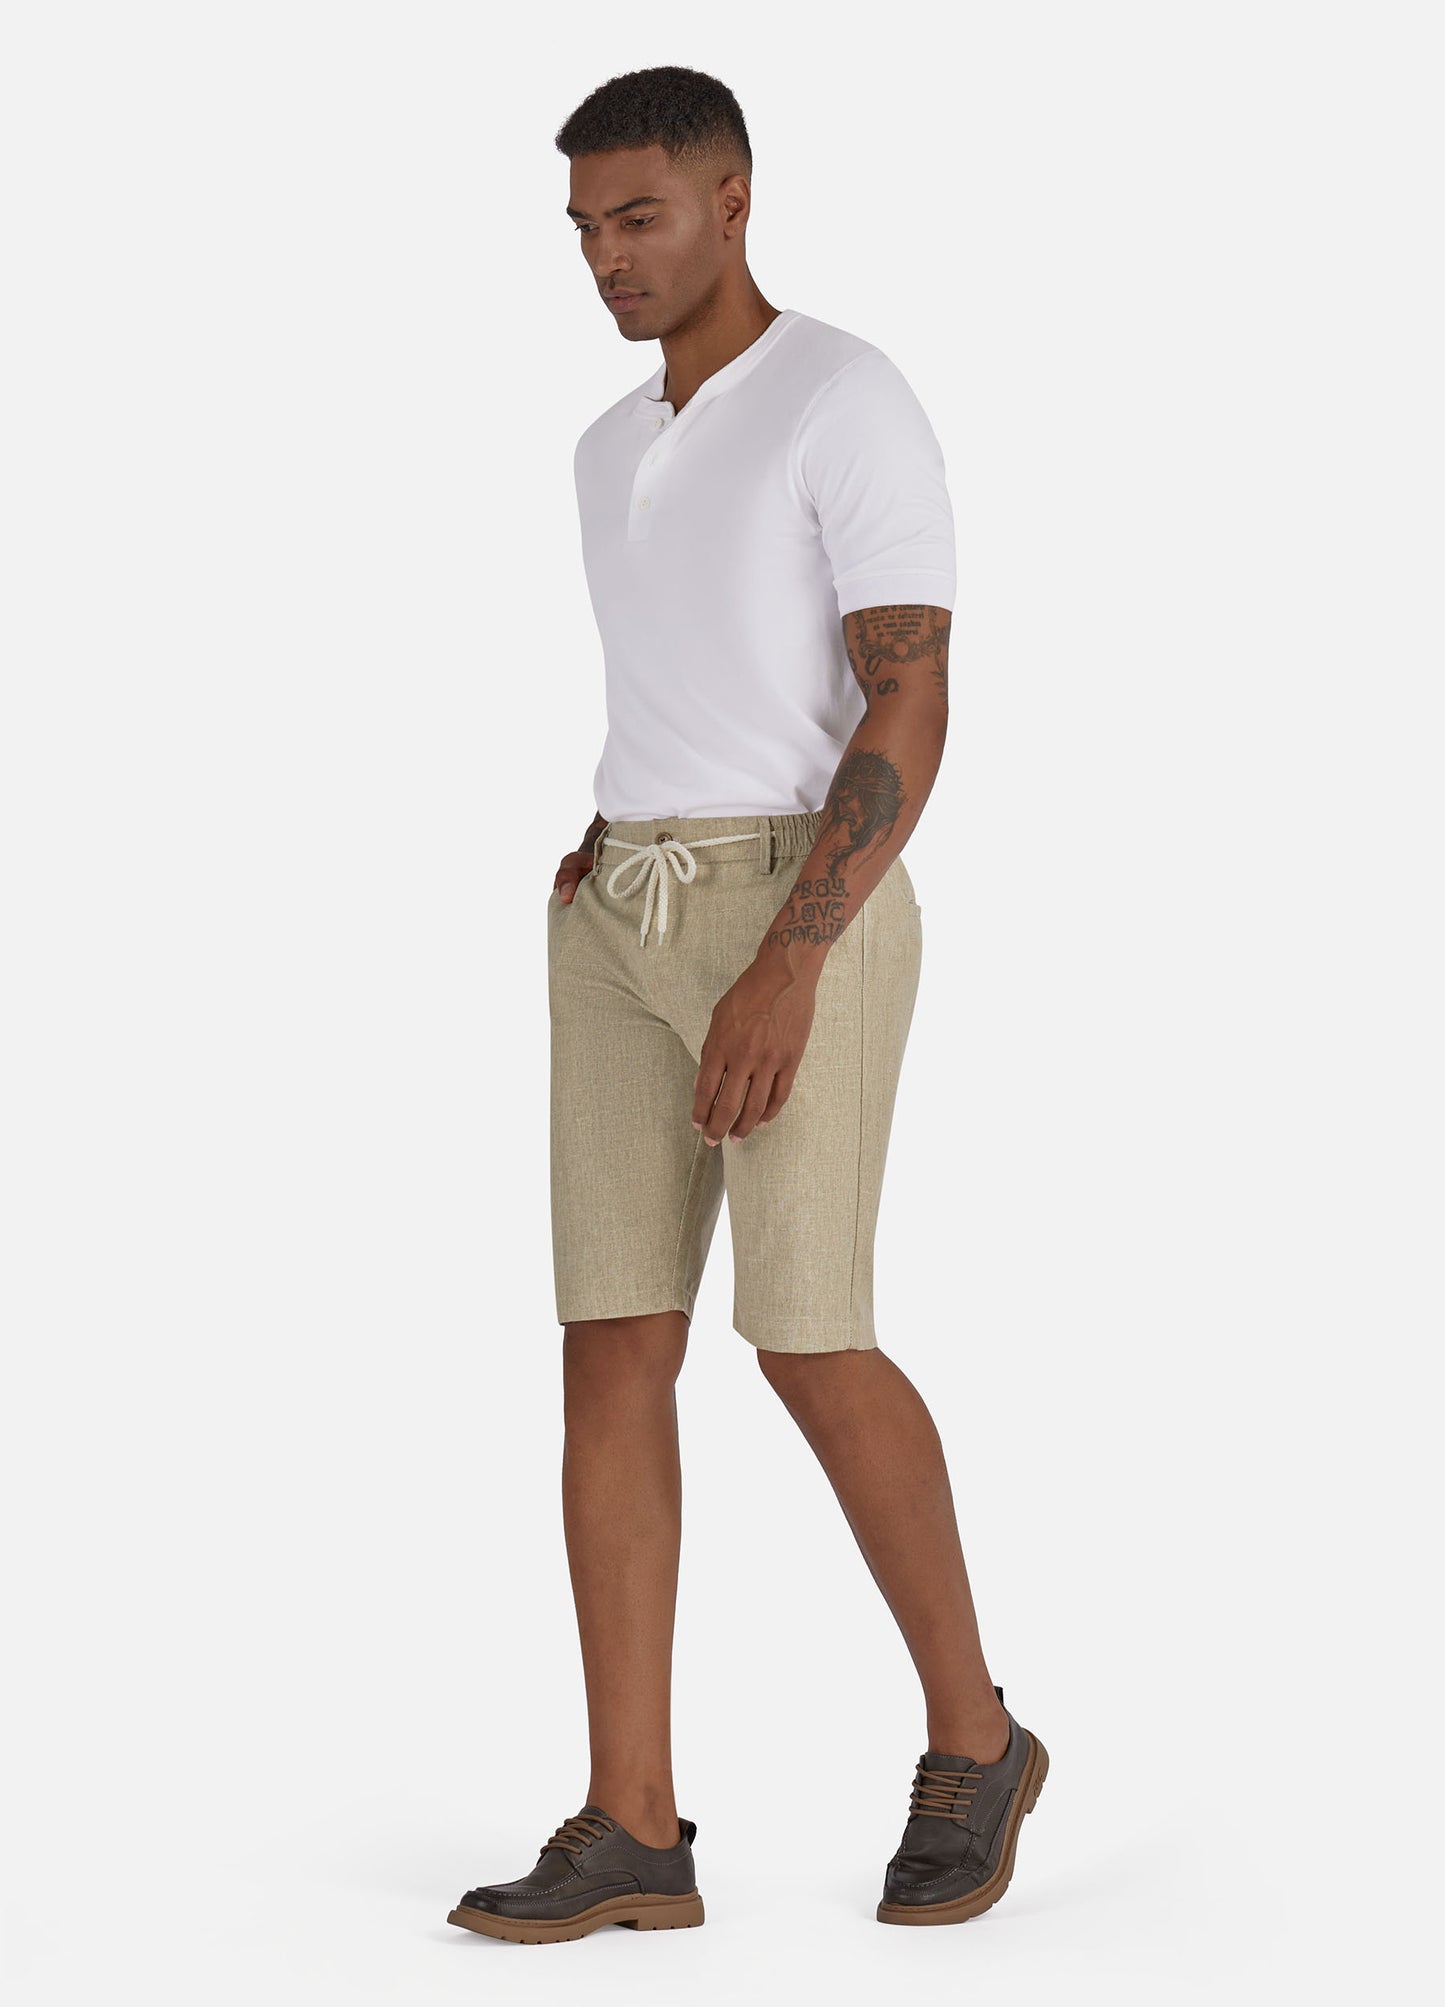 1PA1 Men's Cotton Linen Flat Front Shorts Drawstring Elastic Waist Beach Shorts